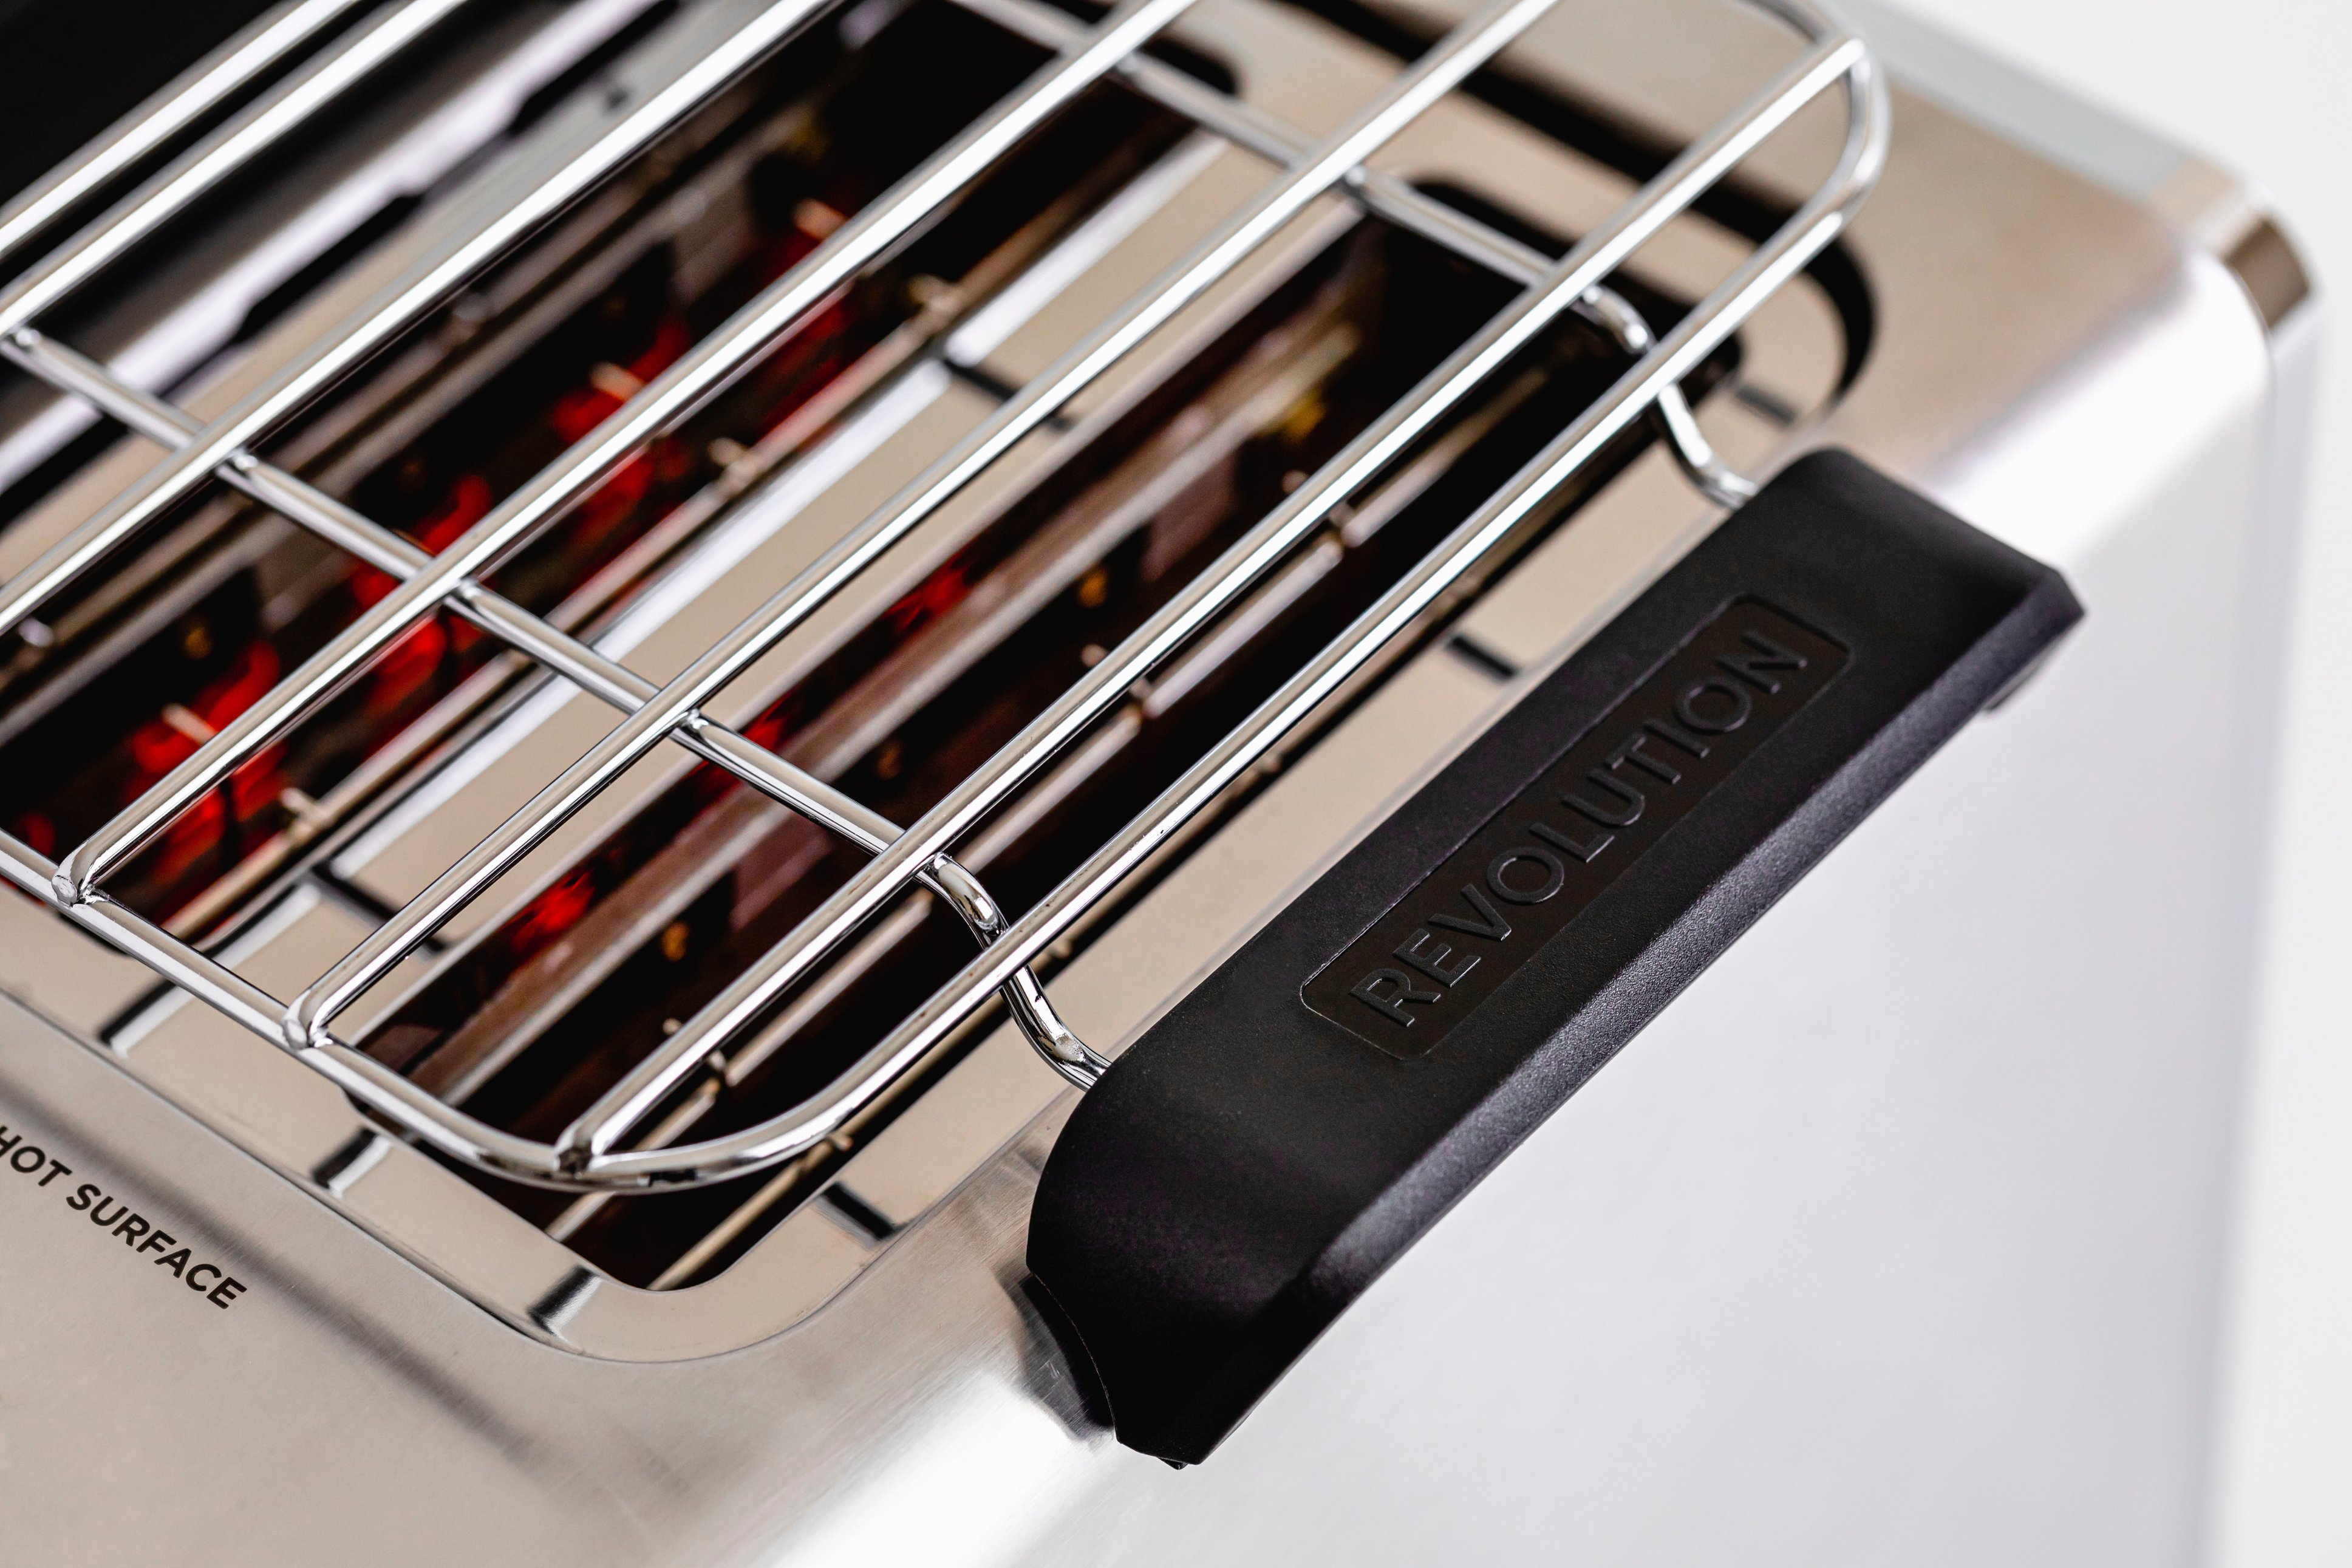 Revolution Cooking Revolution InstaGLO R180 Toaster Stainless Steel R180 -  Best Buy